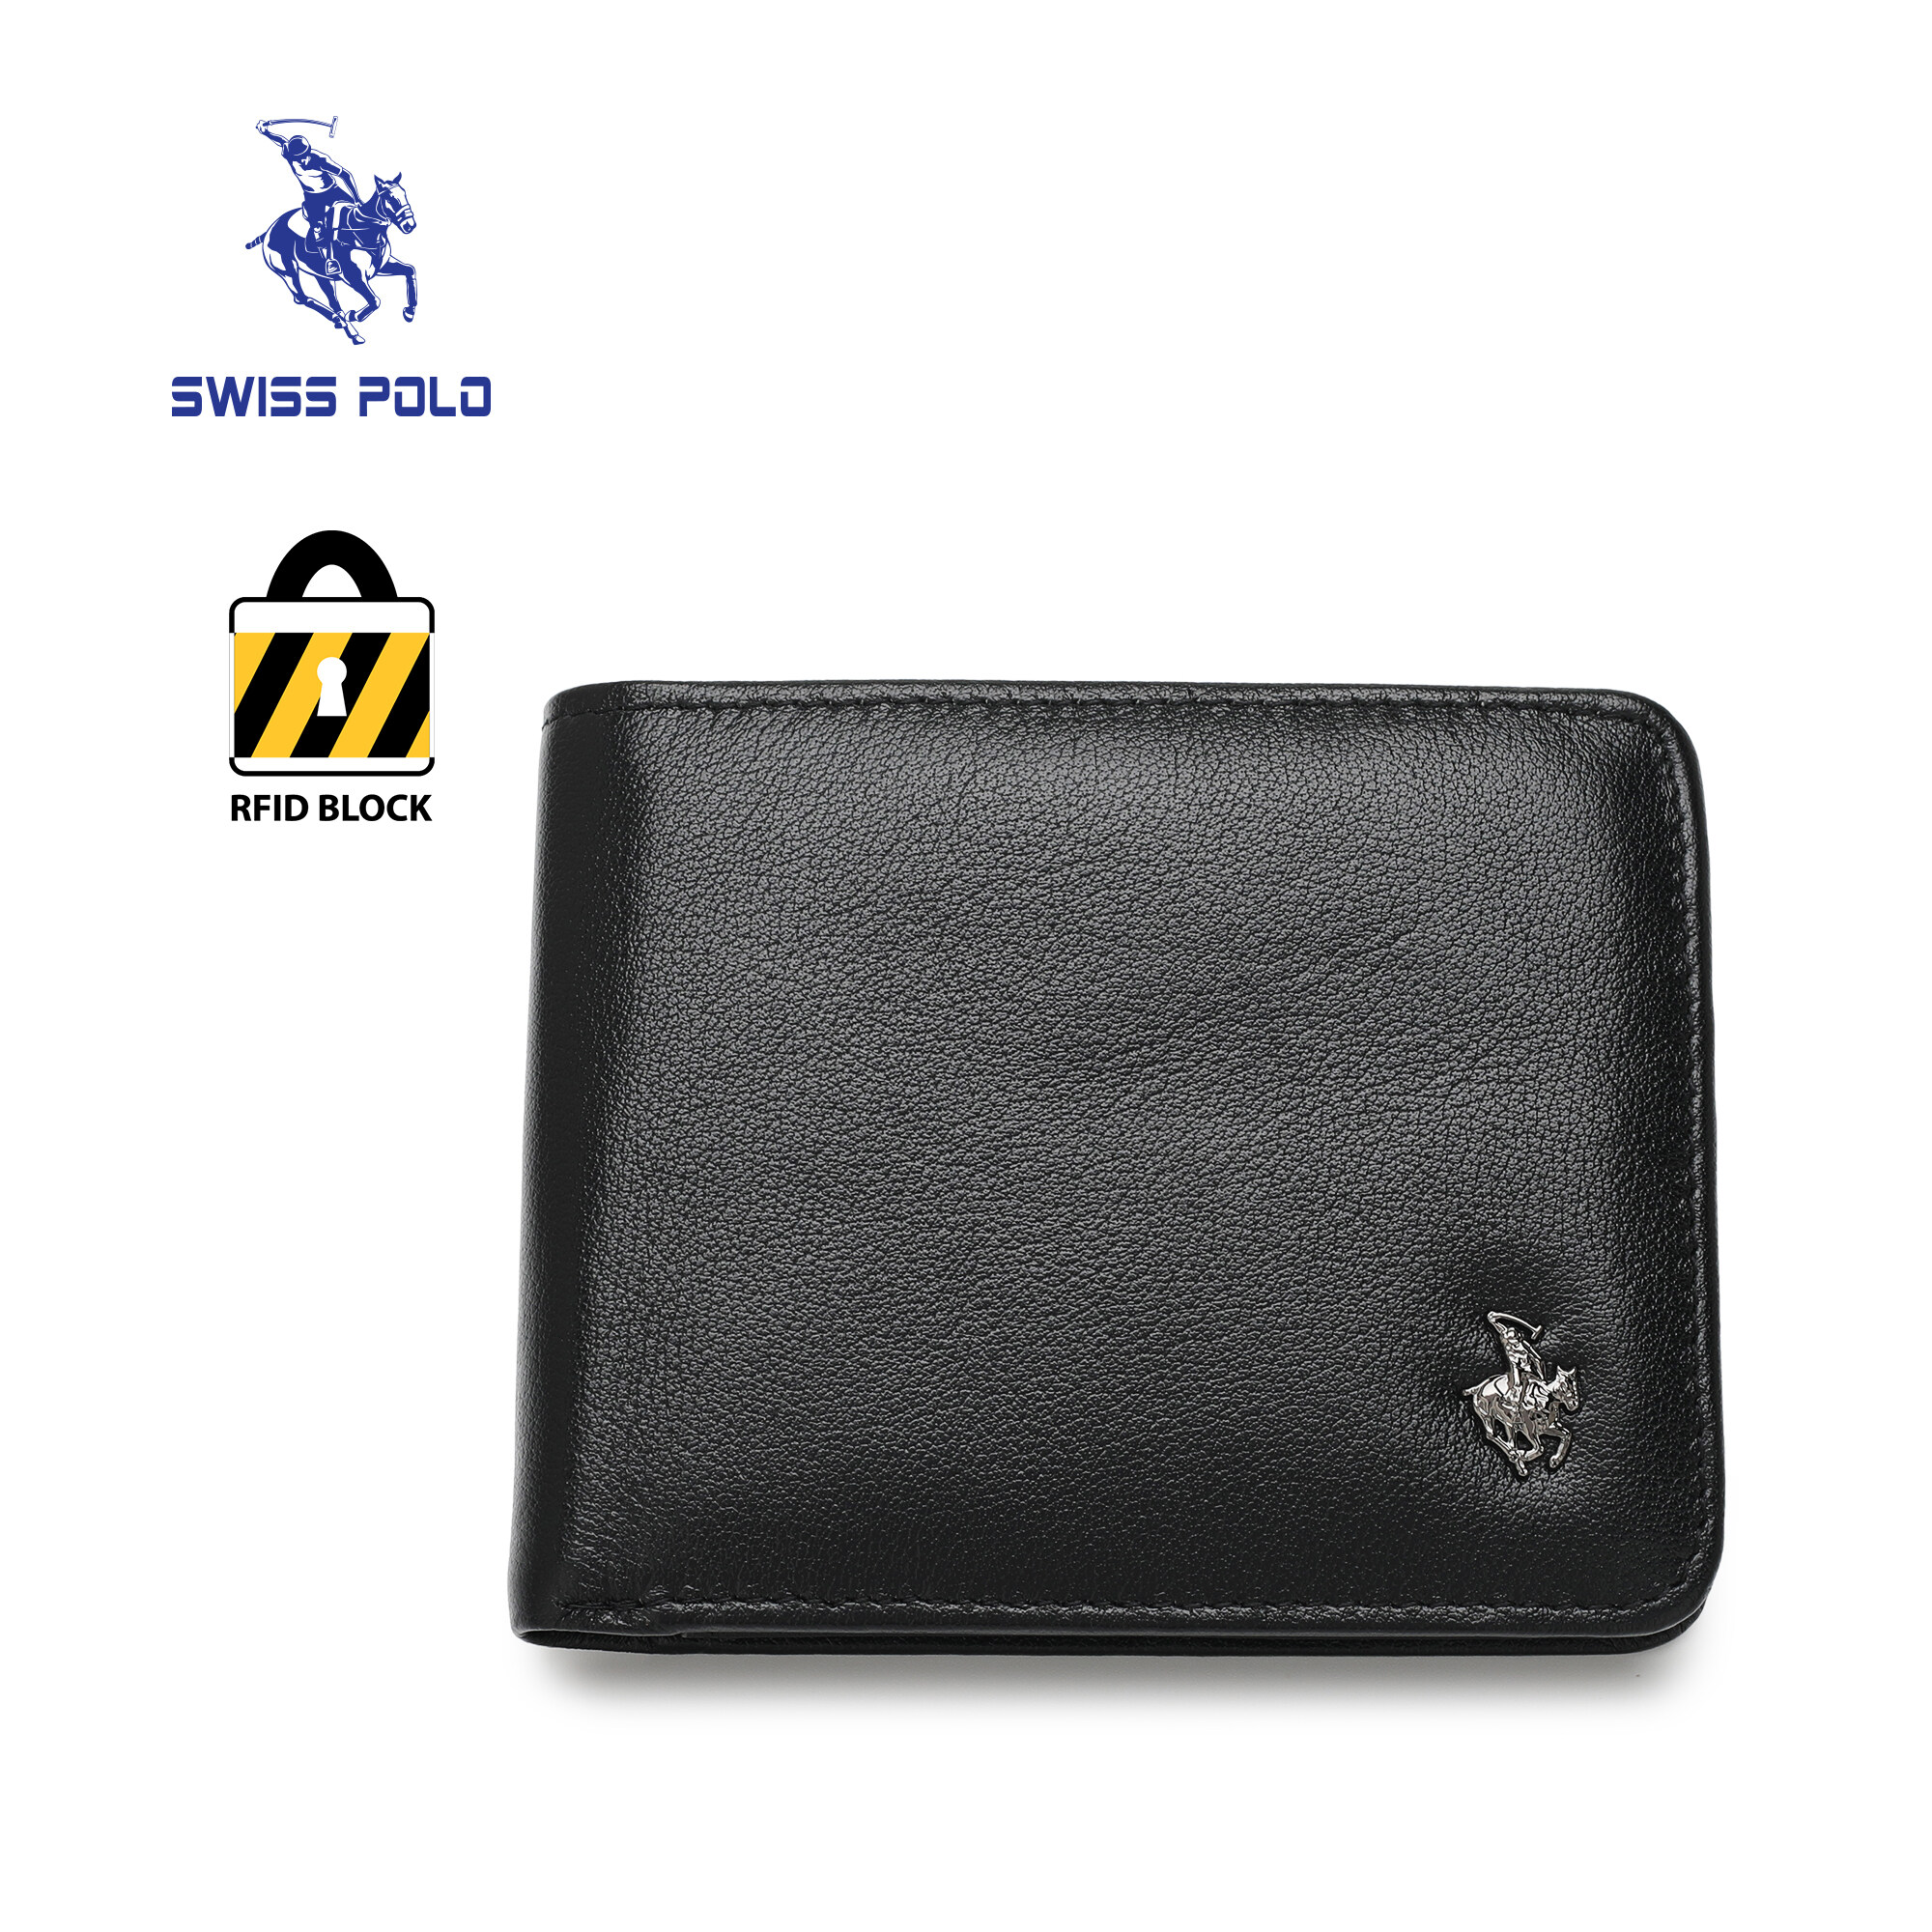 SWISS POLO Genuine Leather RFID Short Wallet SW 167-5 BLACK